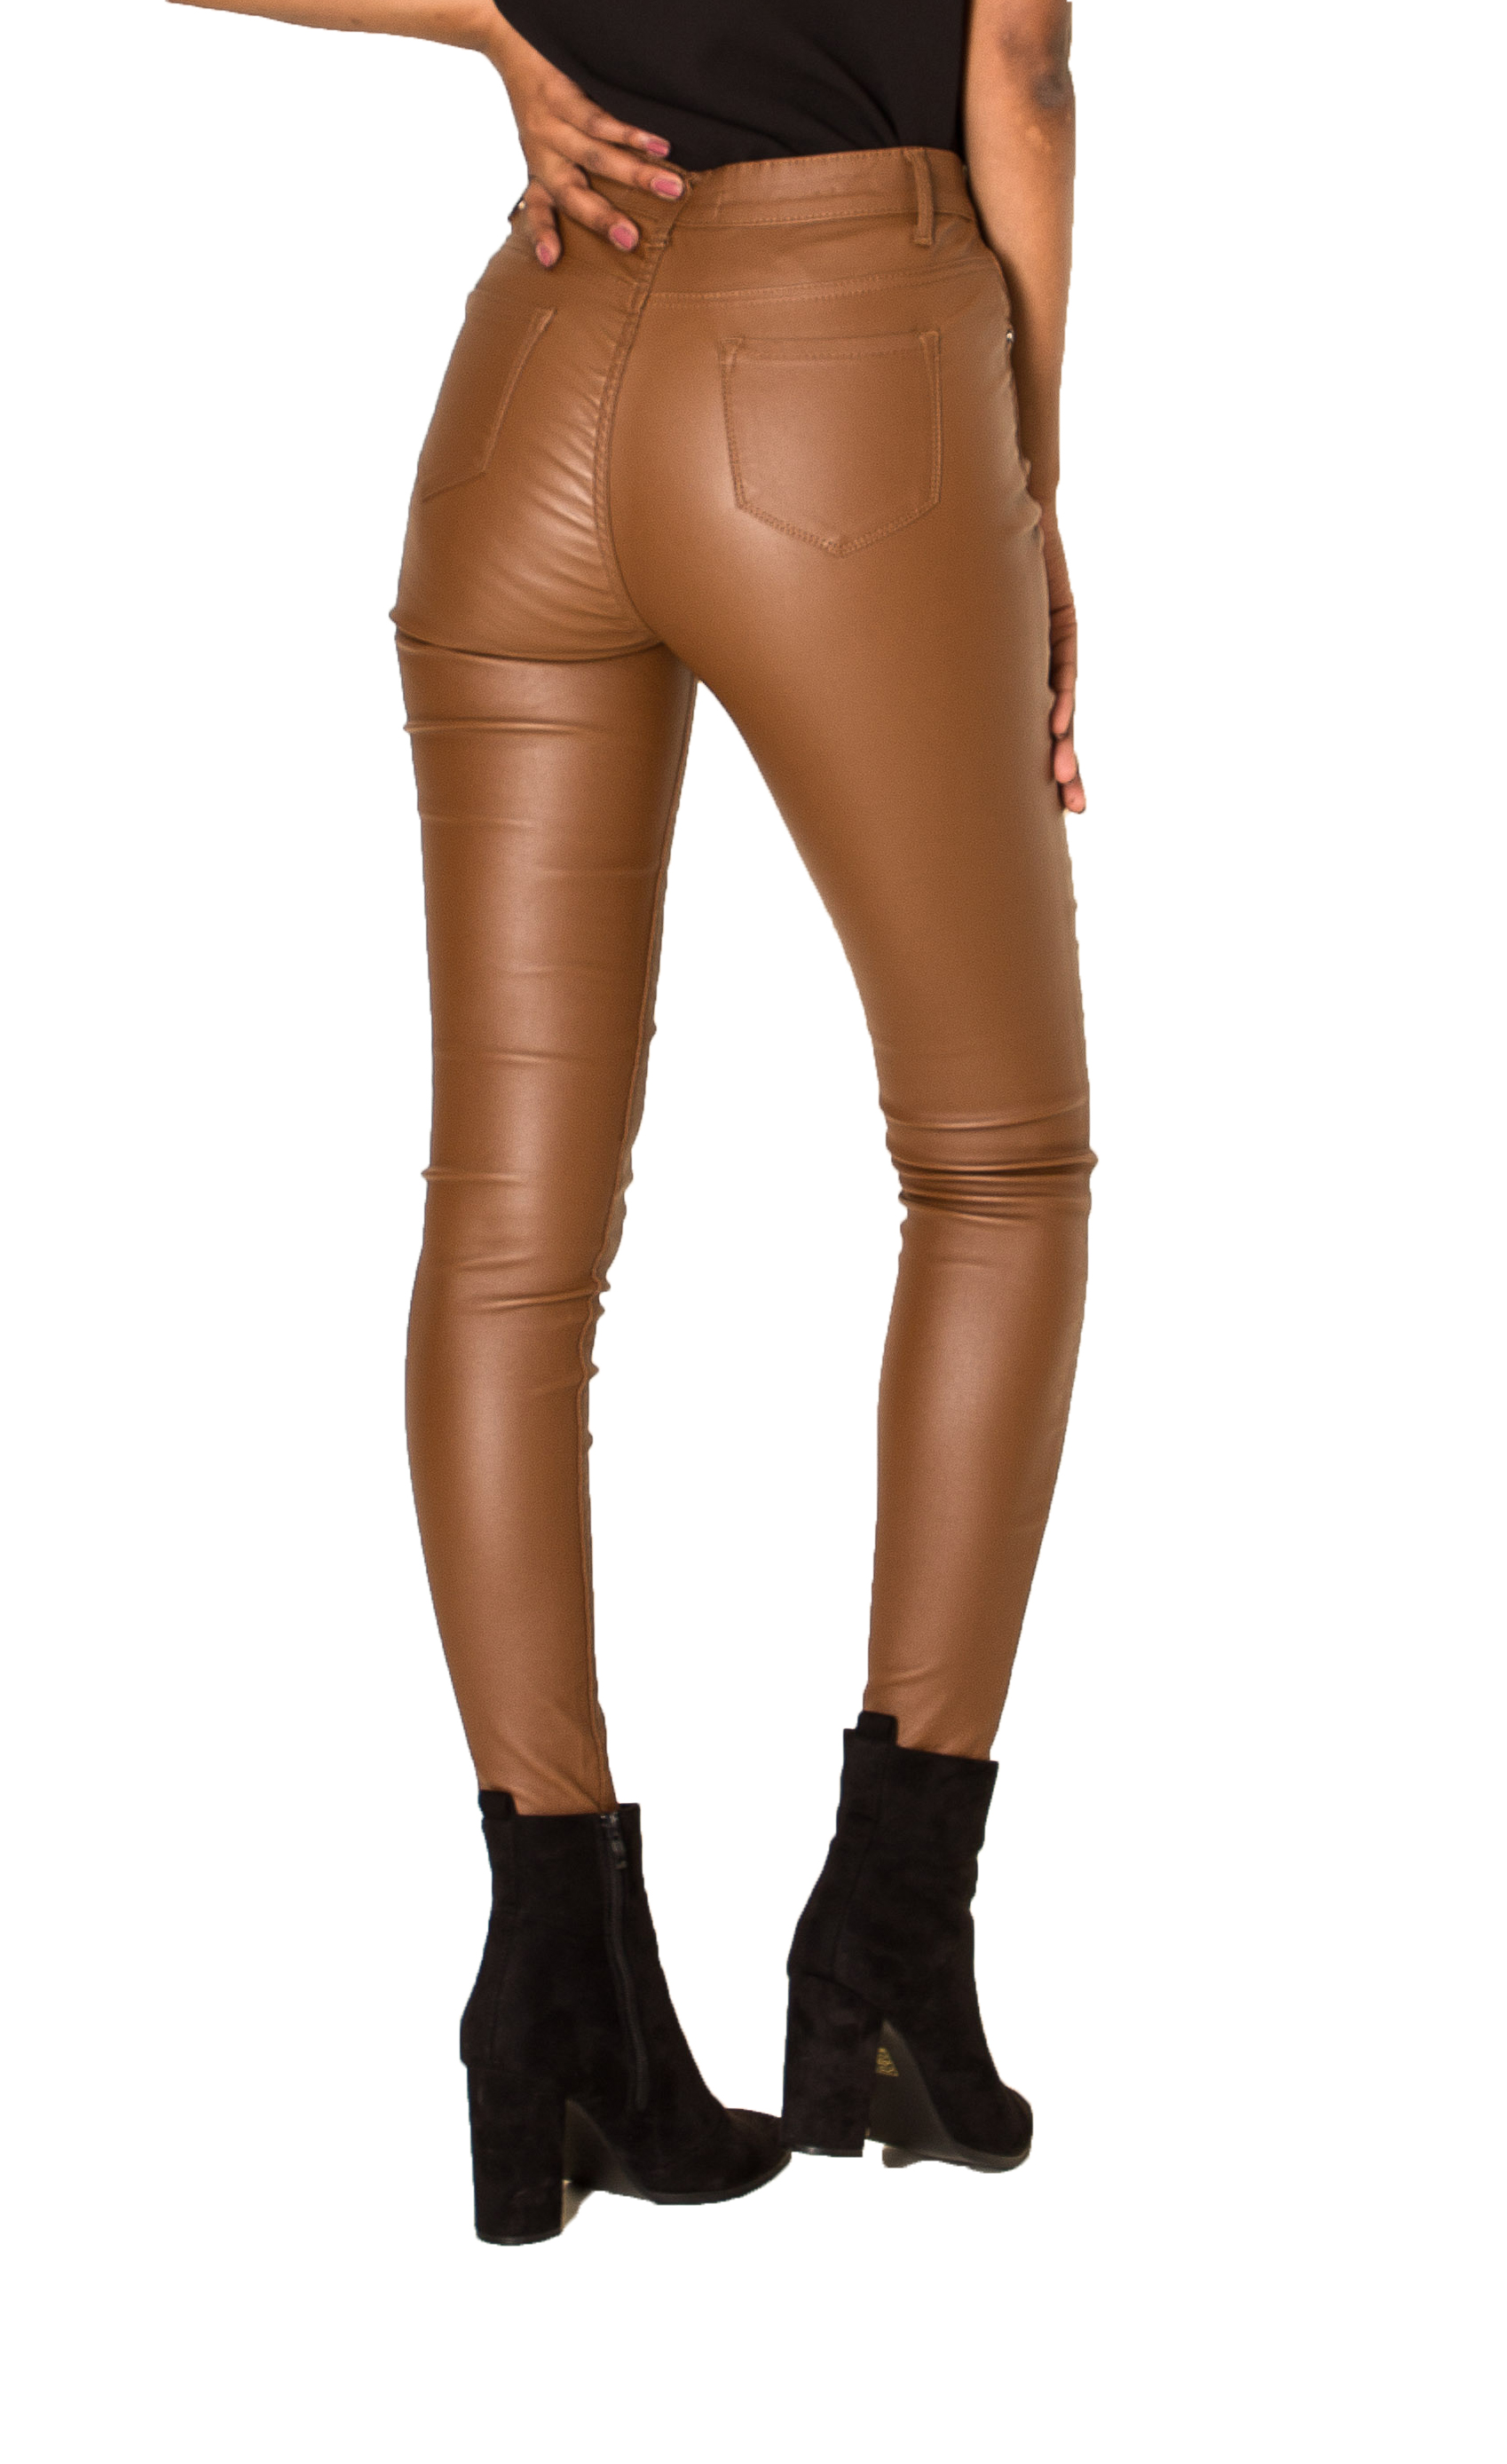 Womens Leather Look Trousers High Waist Faux Skinny Pants Stretch Leggings Ebay